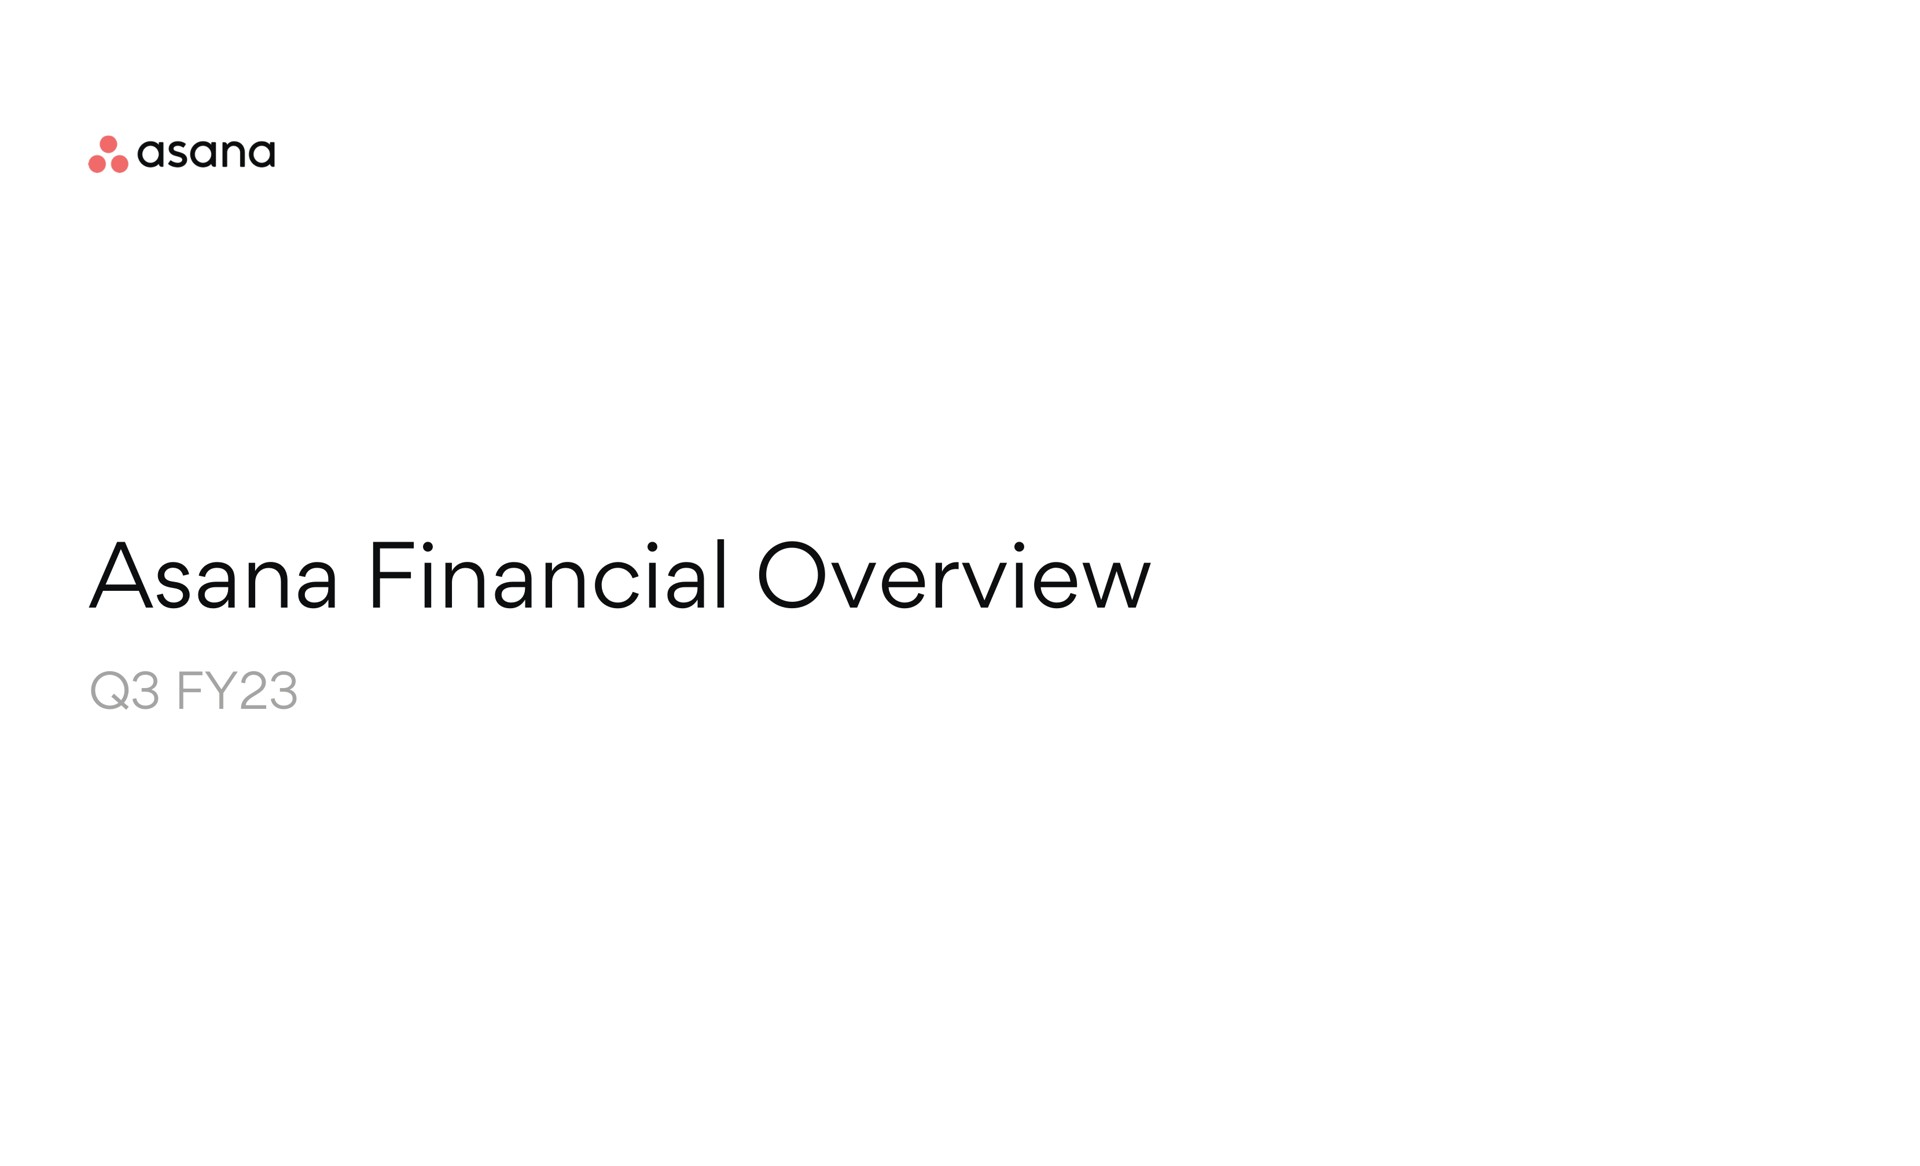 asana financial overview | Asana